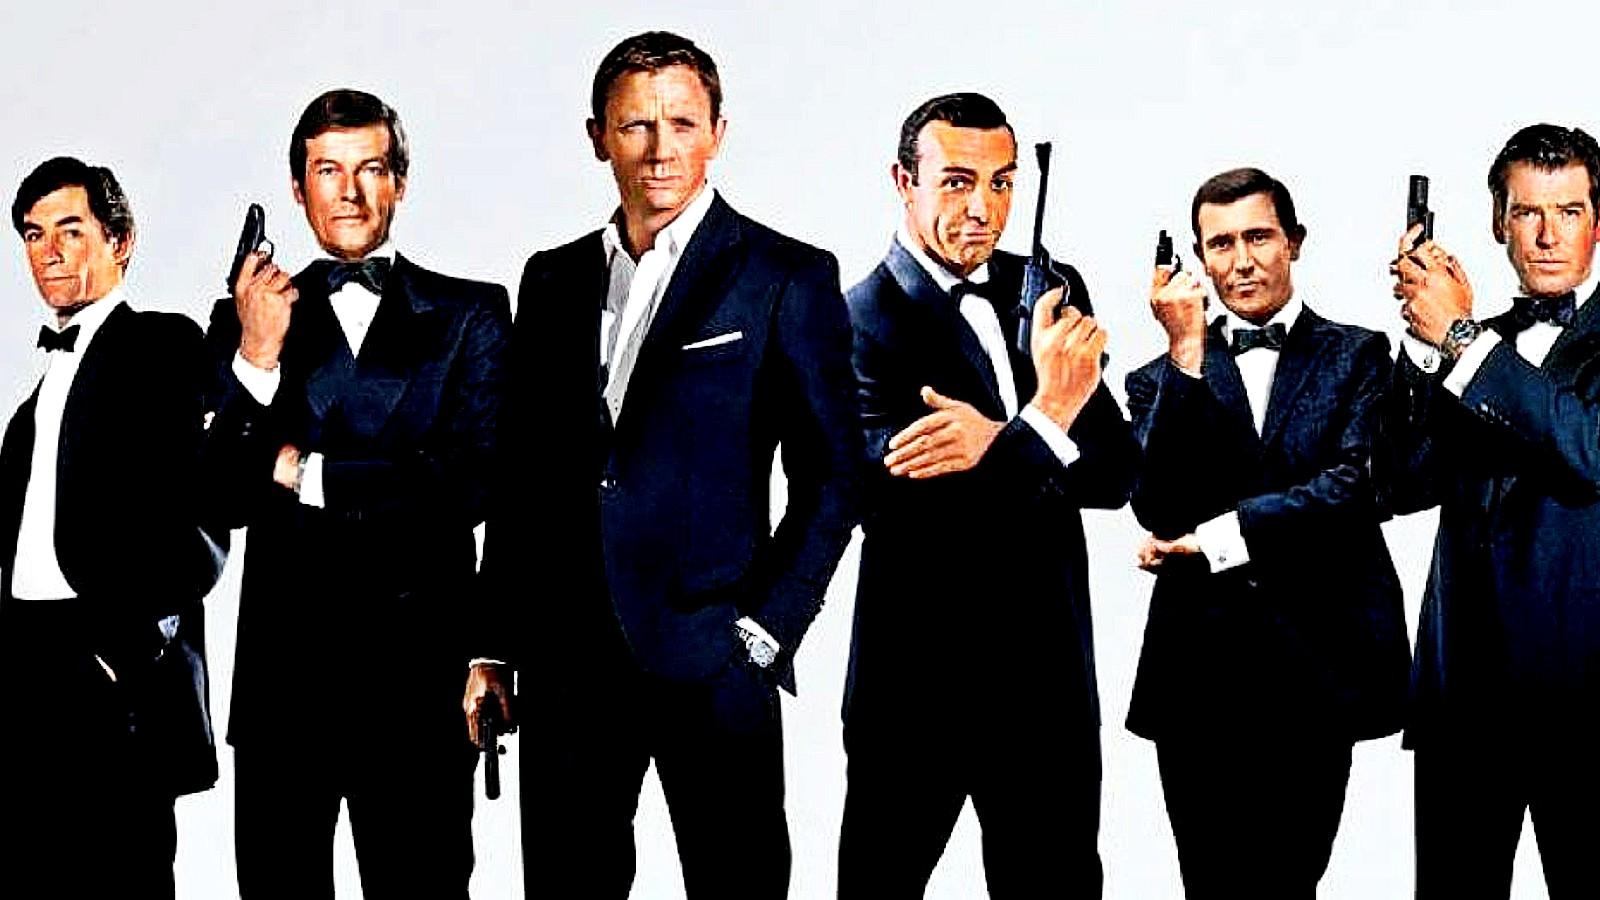 Every James Bond actor